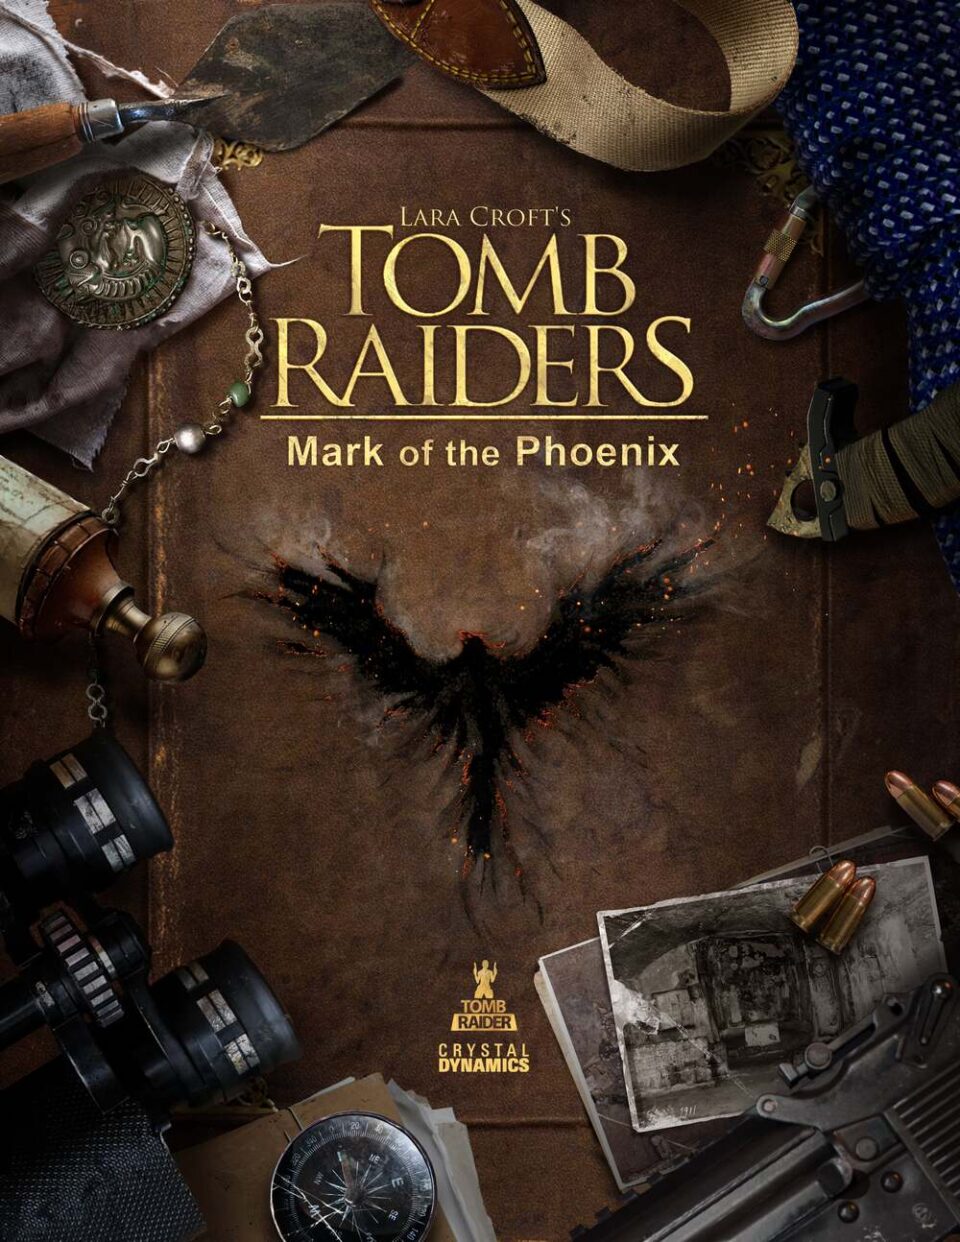 Lara Croft’s Tomb Raiders: Mark of the Phoenix